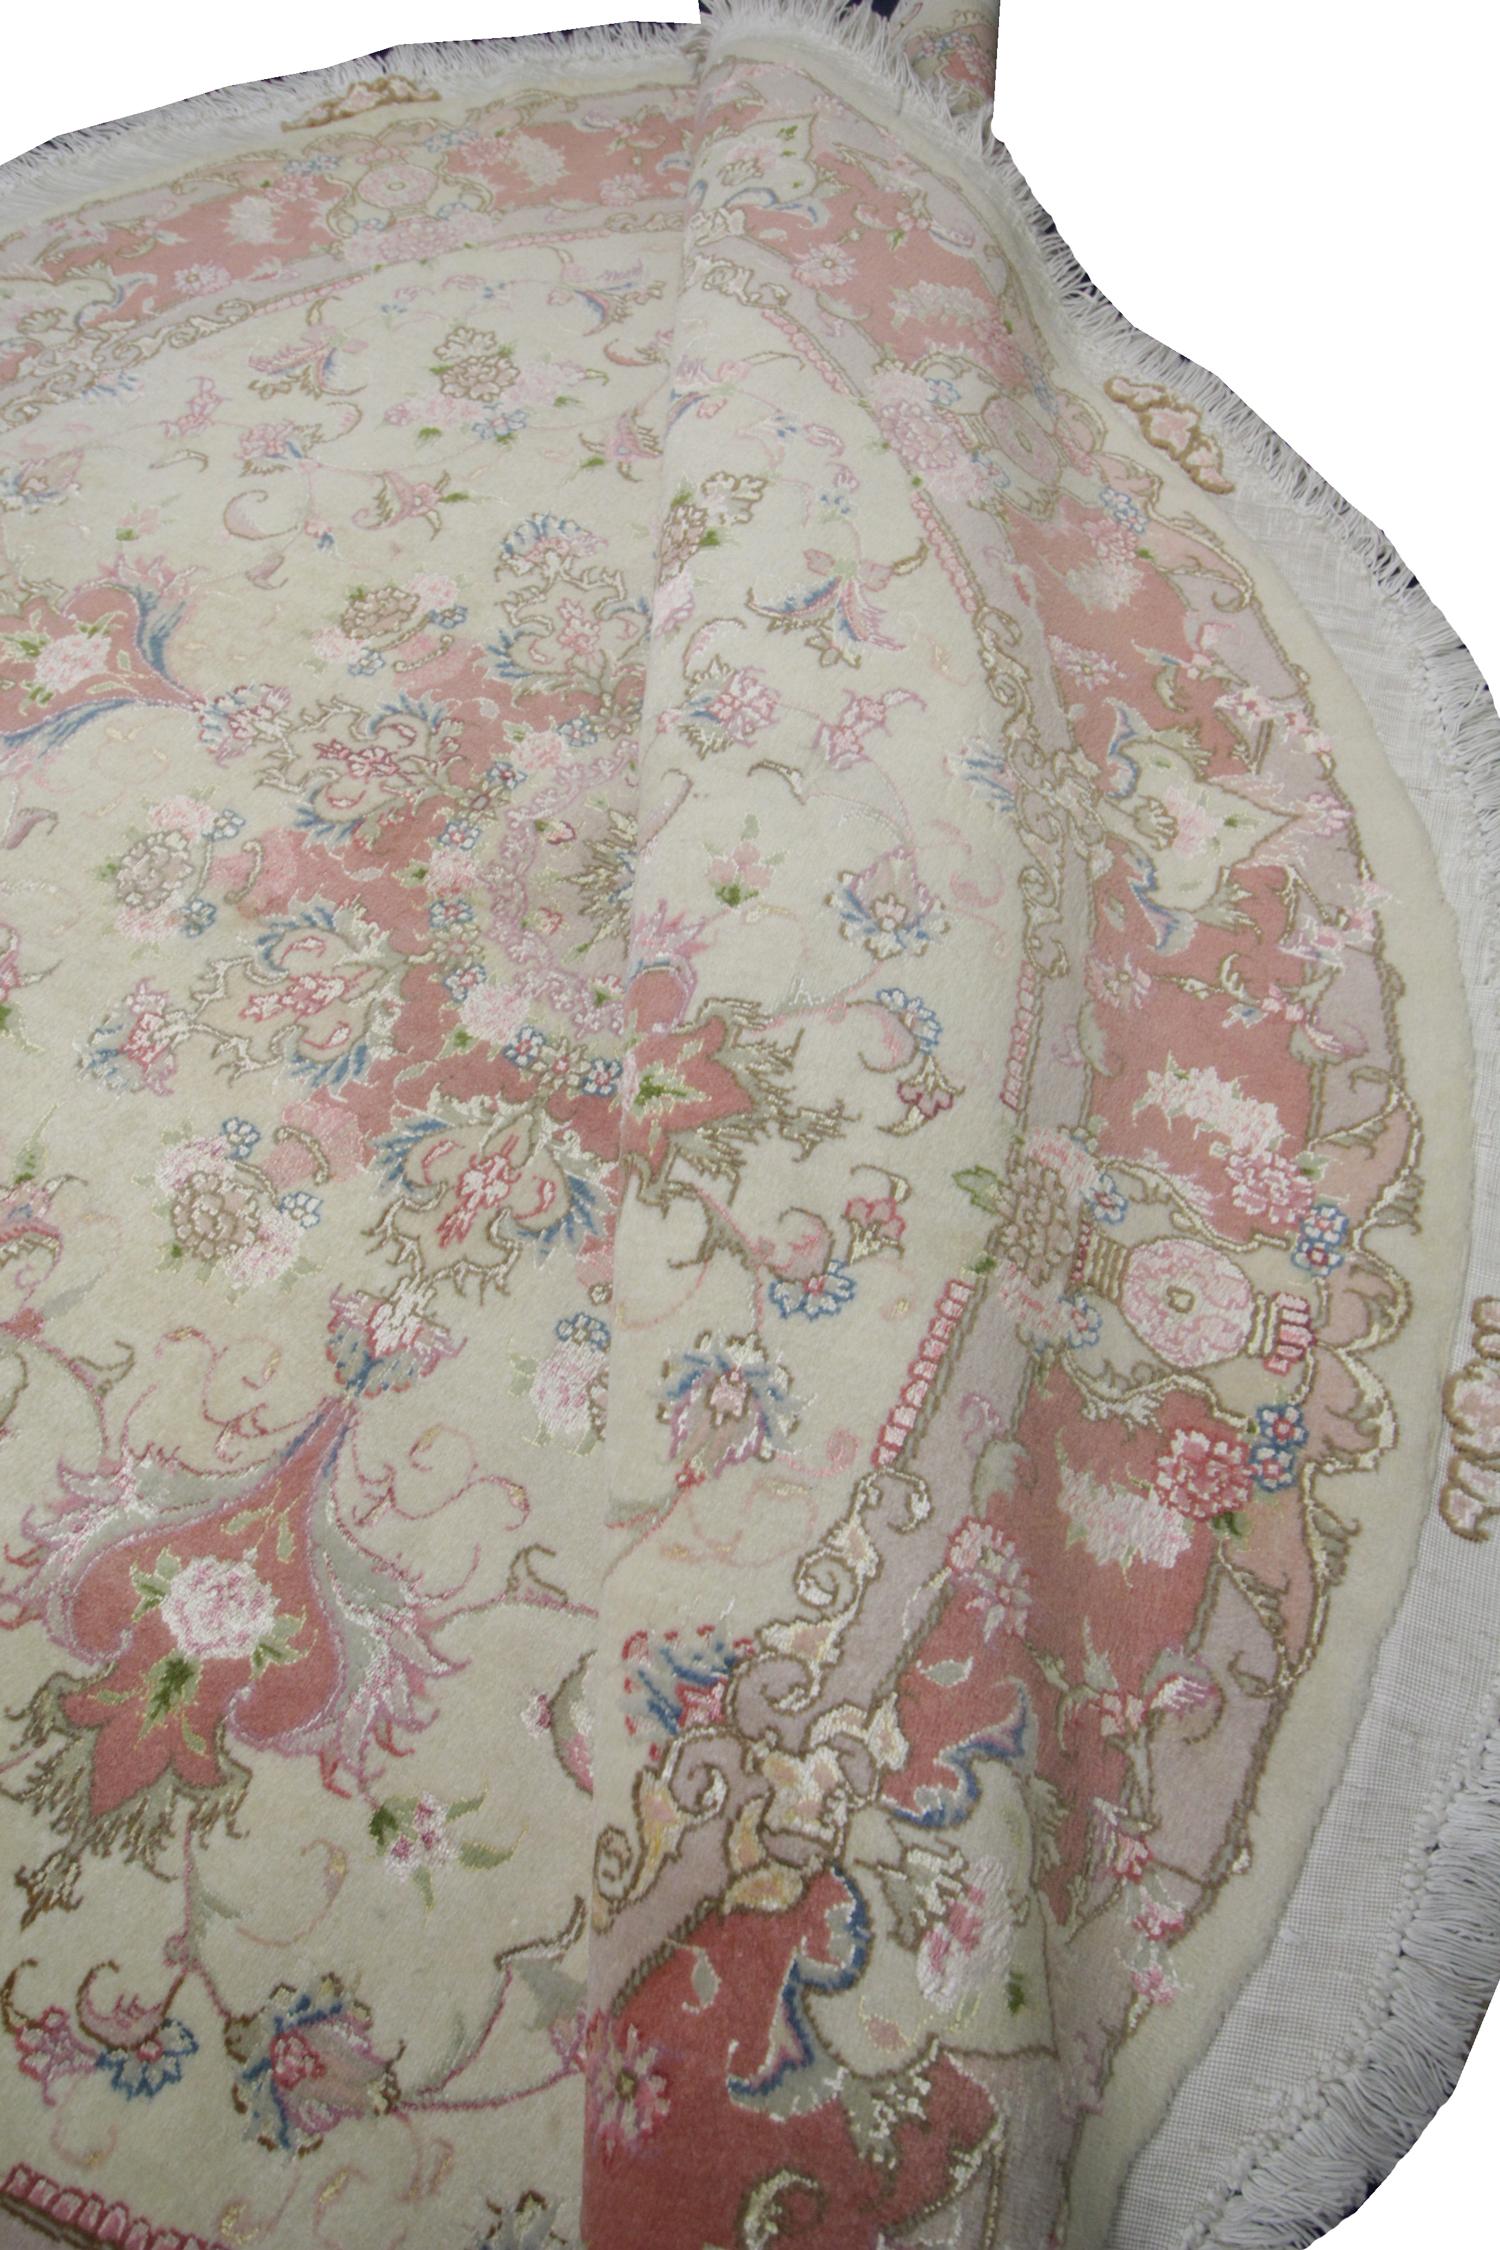 Circular Turkish Wool and Silk Rug, Oriental Cream Pink Handmade Carpet For Sale 7